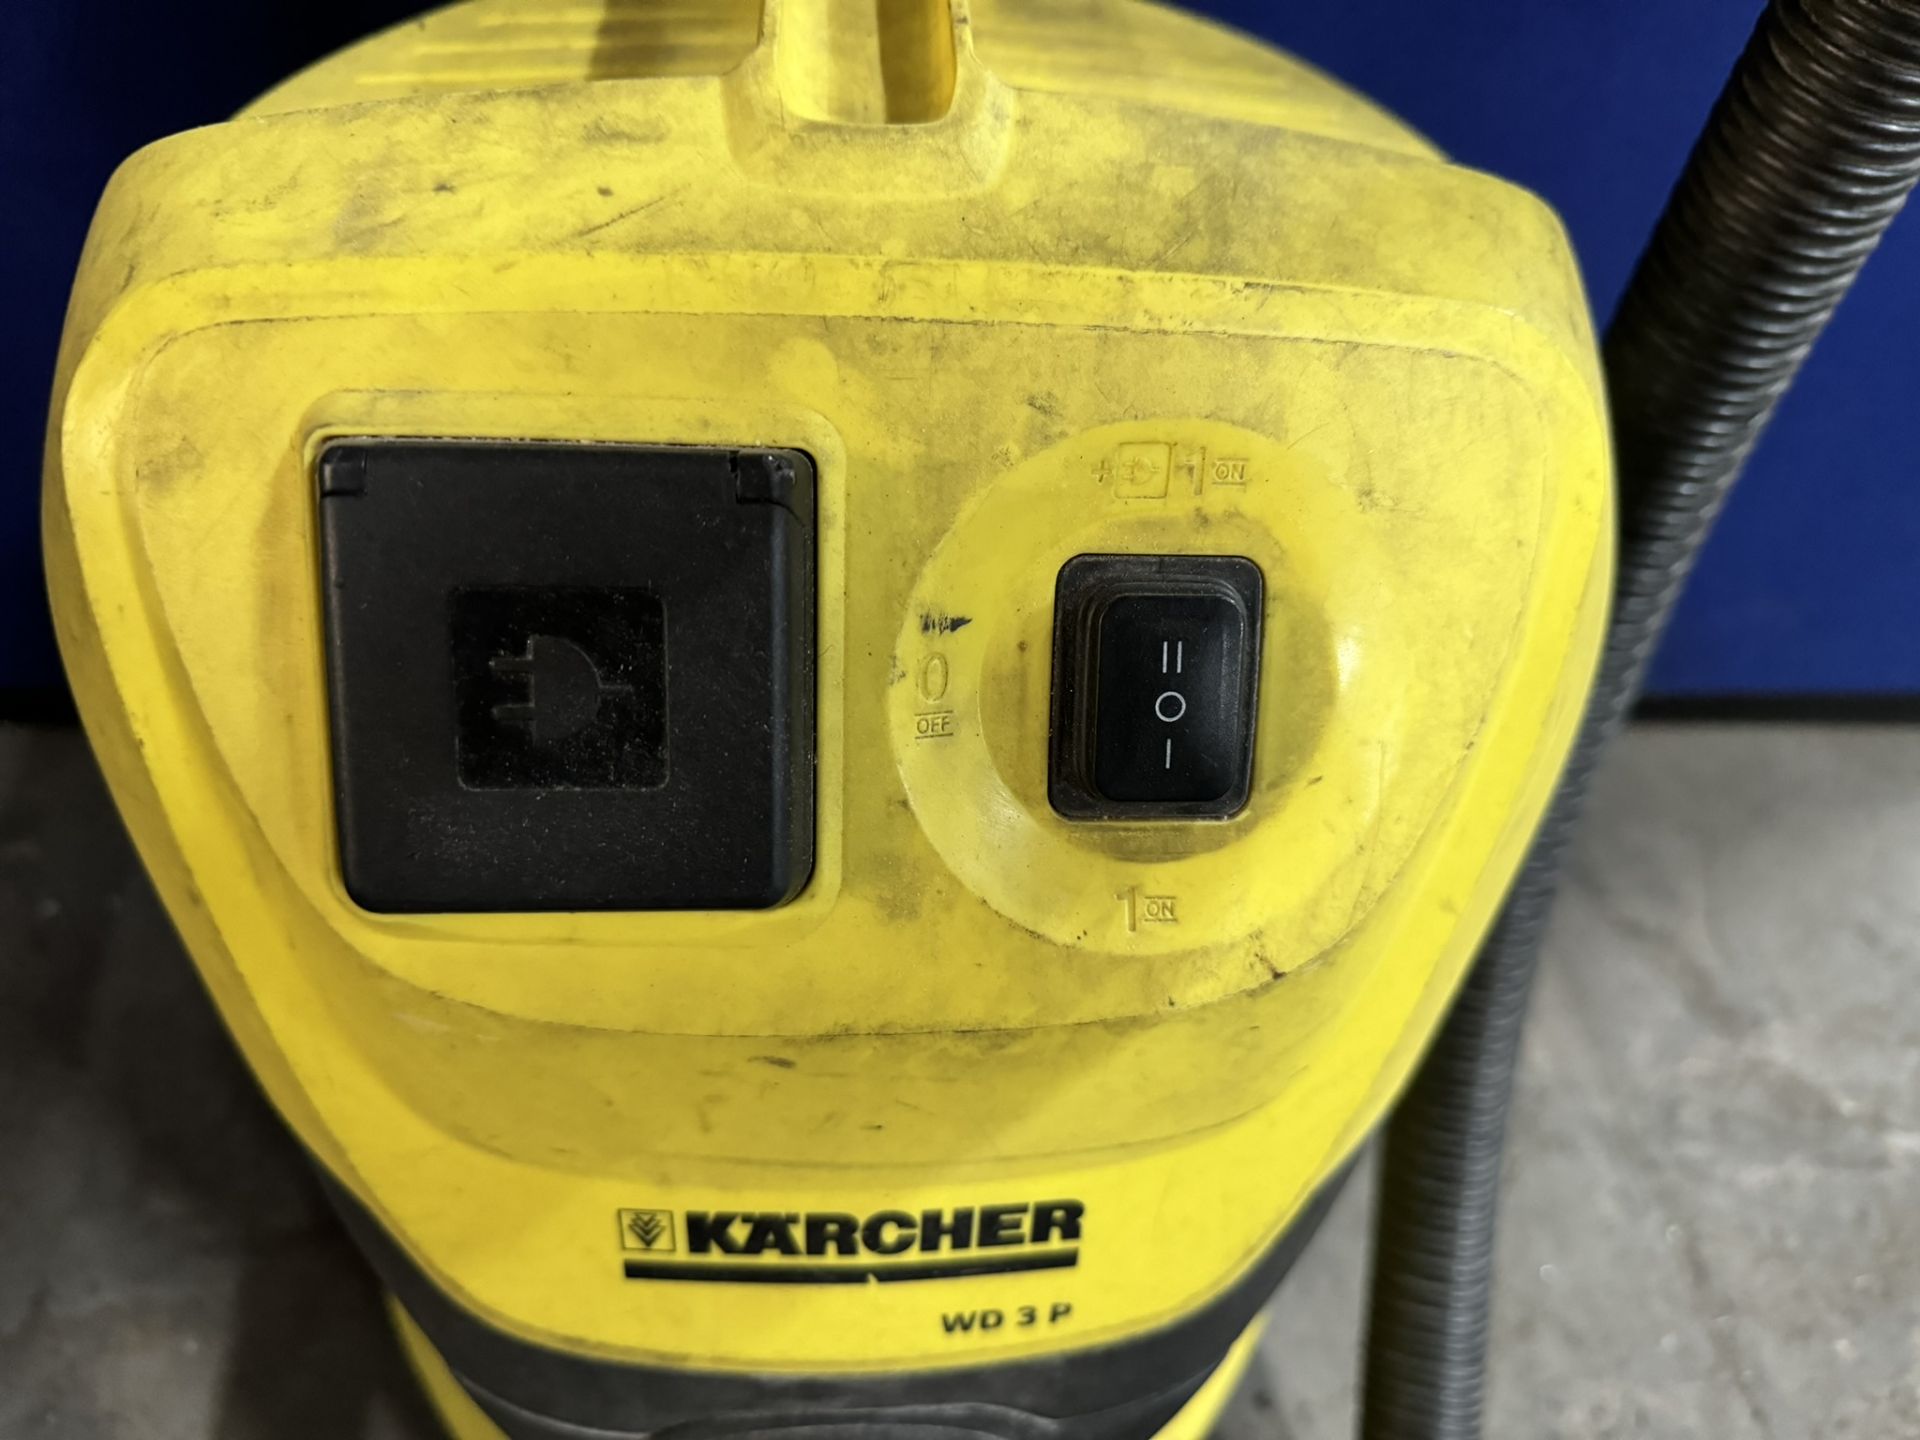 Karcher WD3P Cylinder Wet and Dry Vacuum Cleaner - Bild 3 aus 5